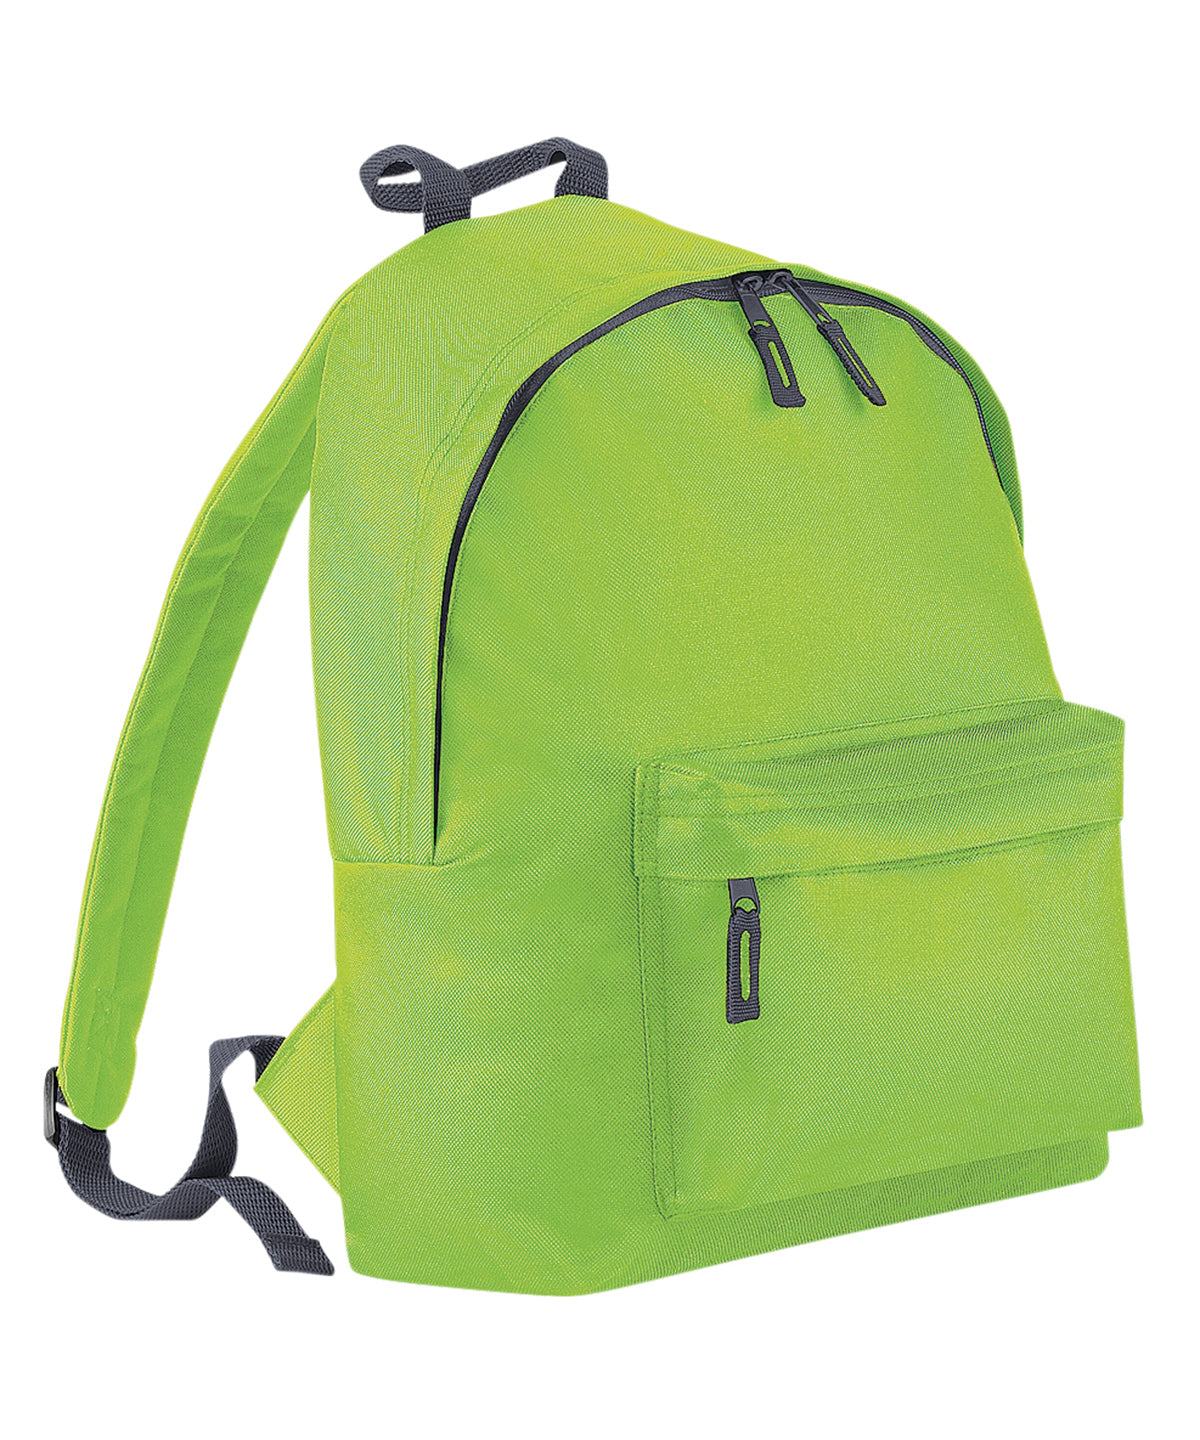 Töskur - Junior Fashion Backpack